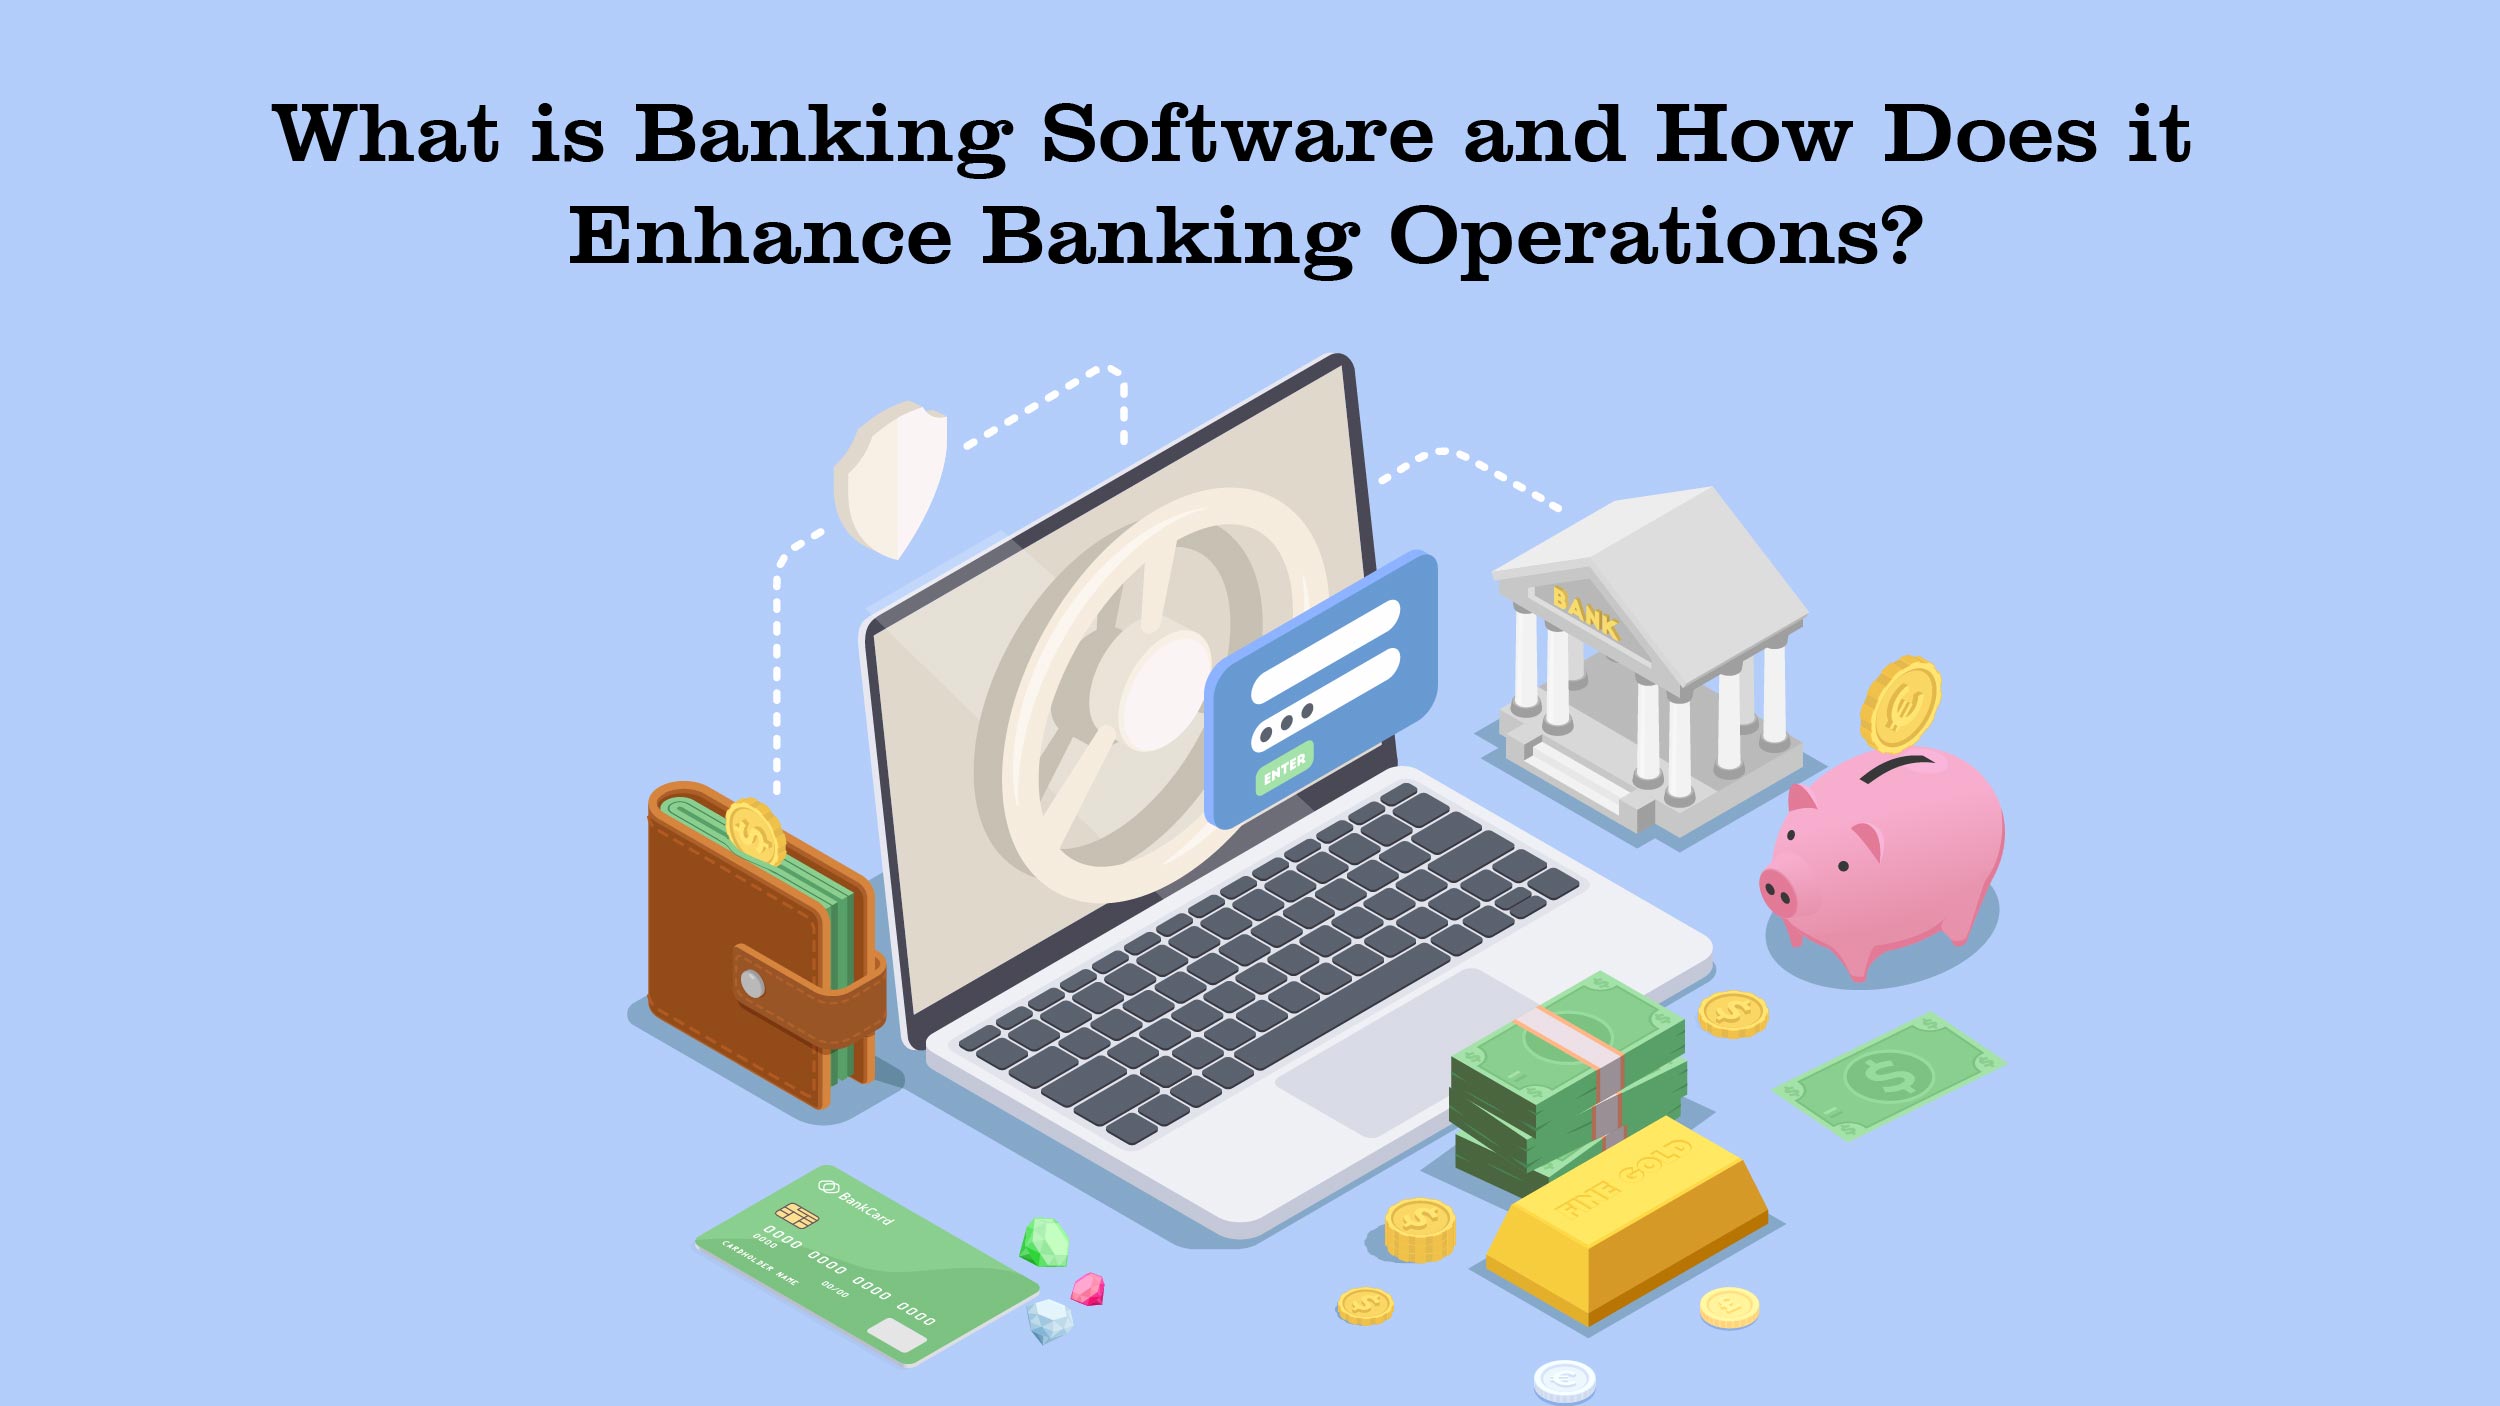 Banking Software